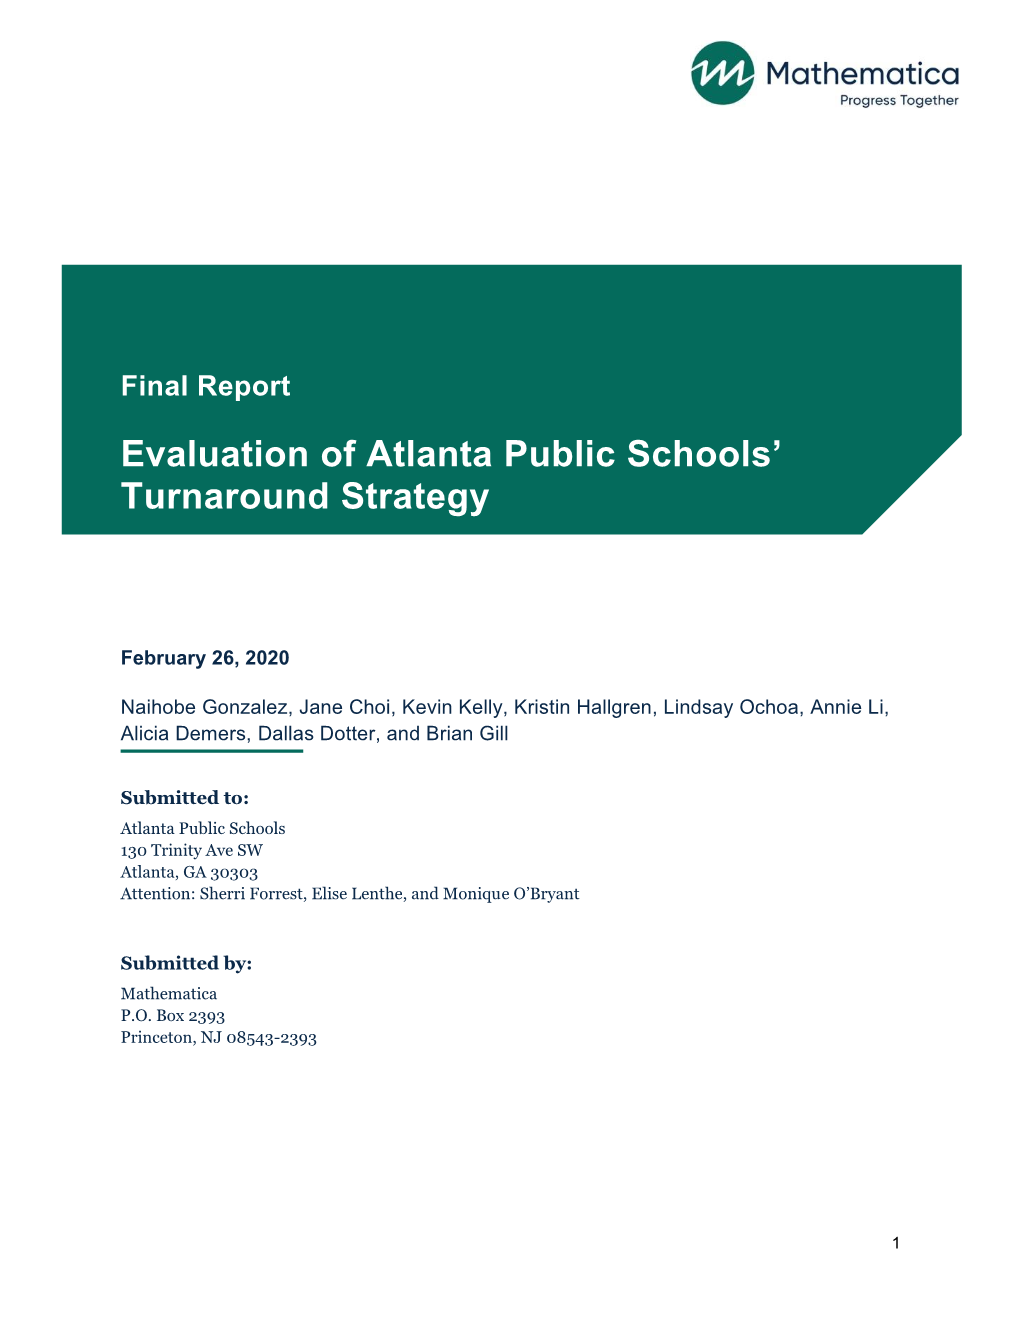 Year 3 Report of the Atlanta Public Schools Turnaround Strategy